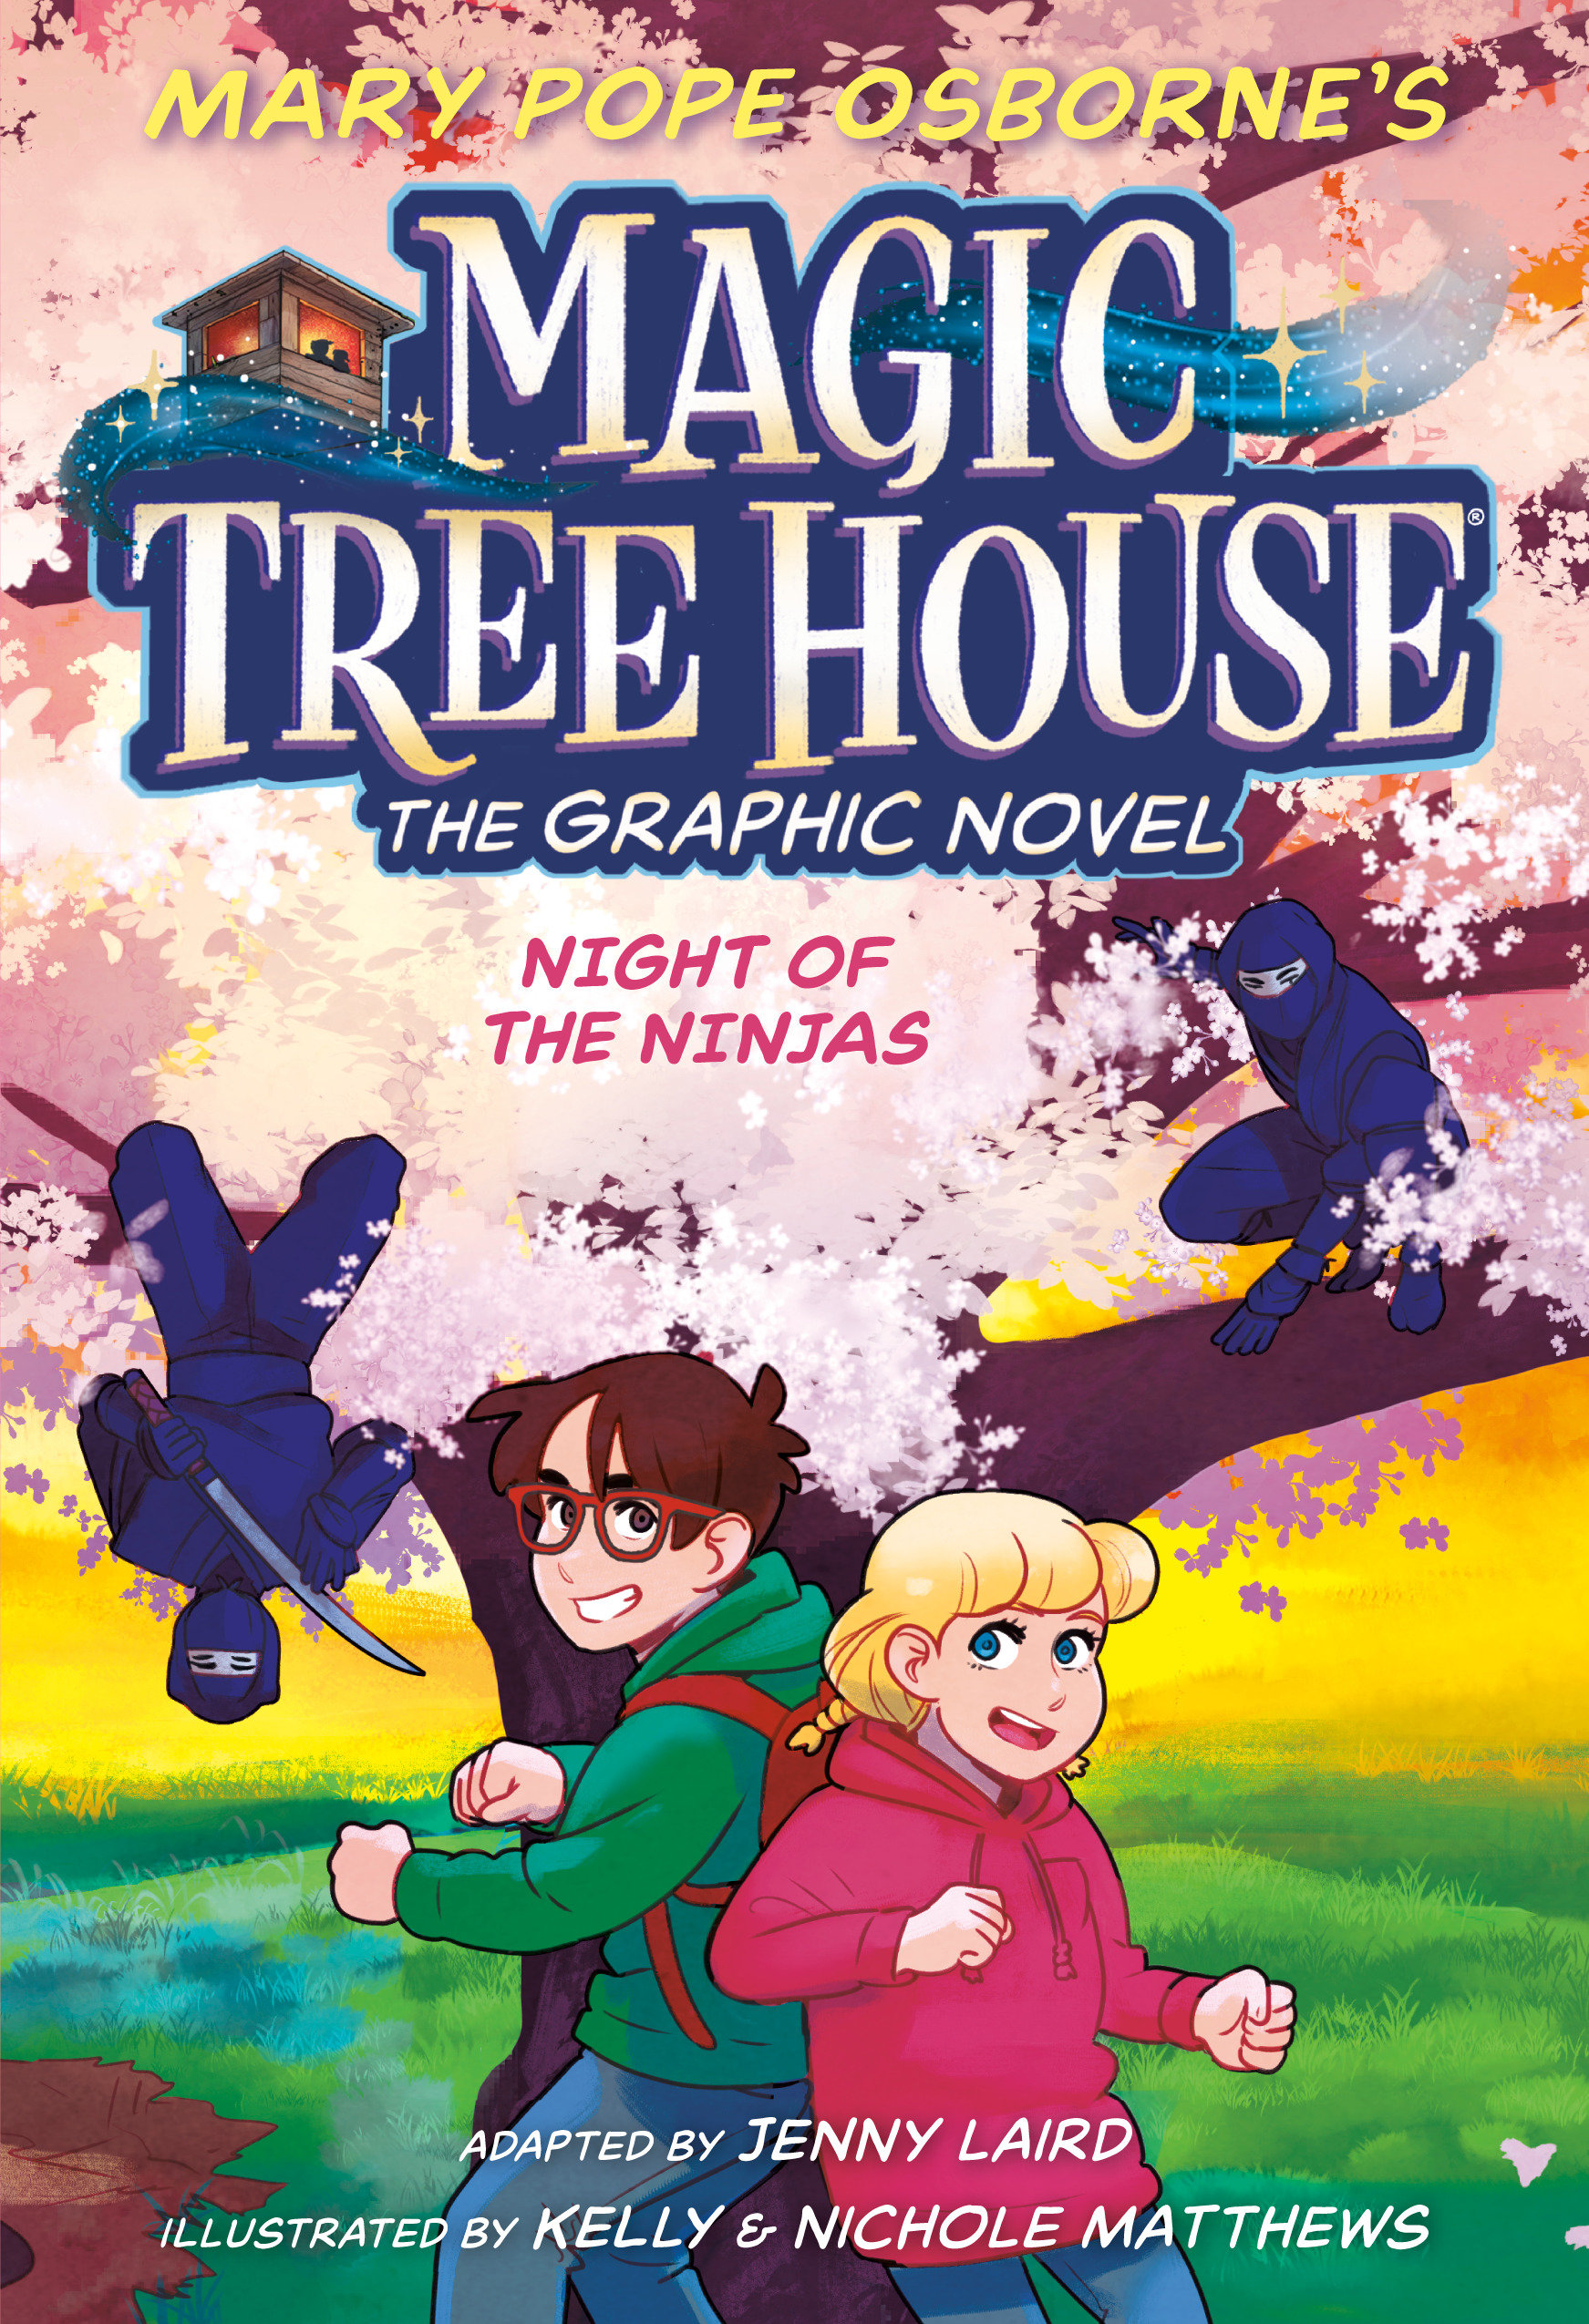 Mary Pope Osborne's Magic tree house. Night of the Ninjas the graphic novel cover image